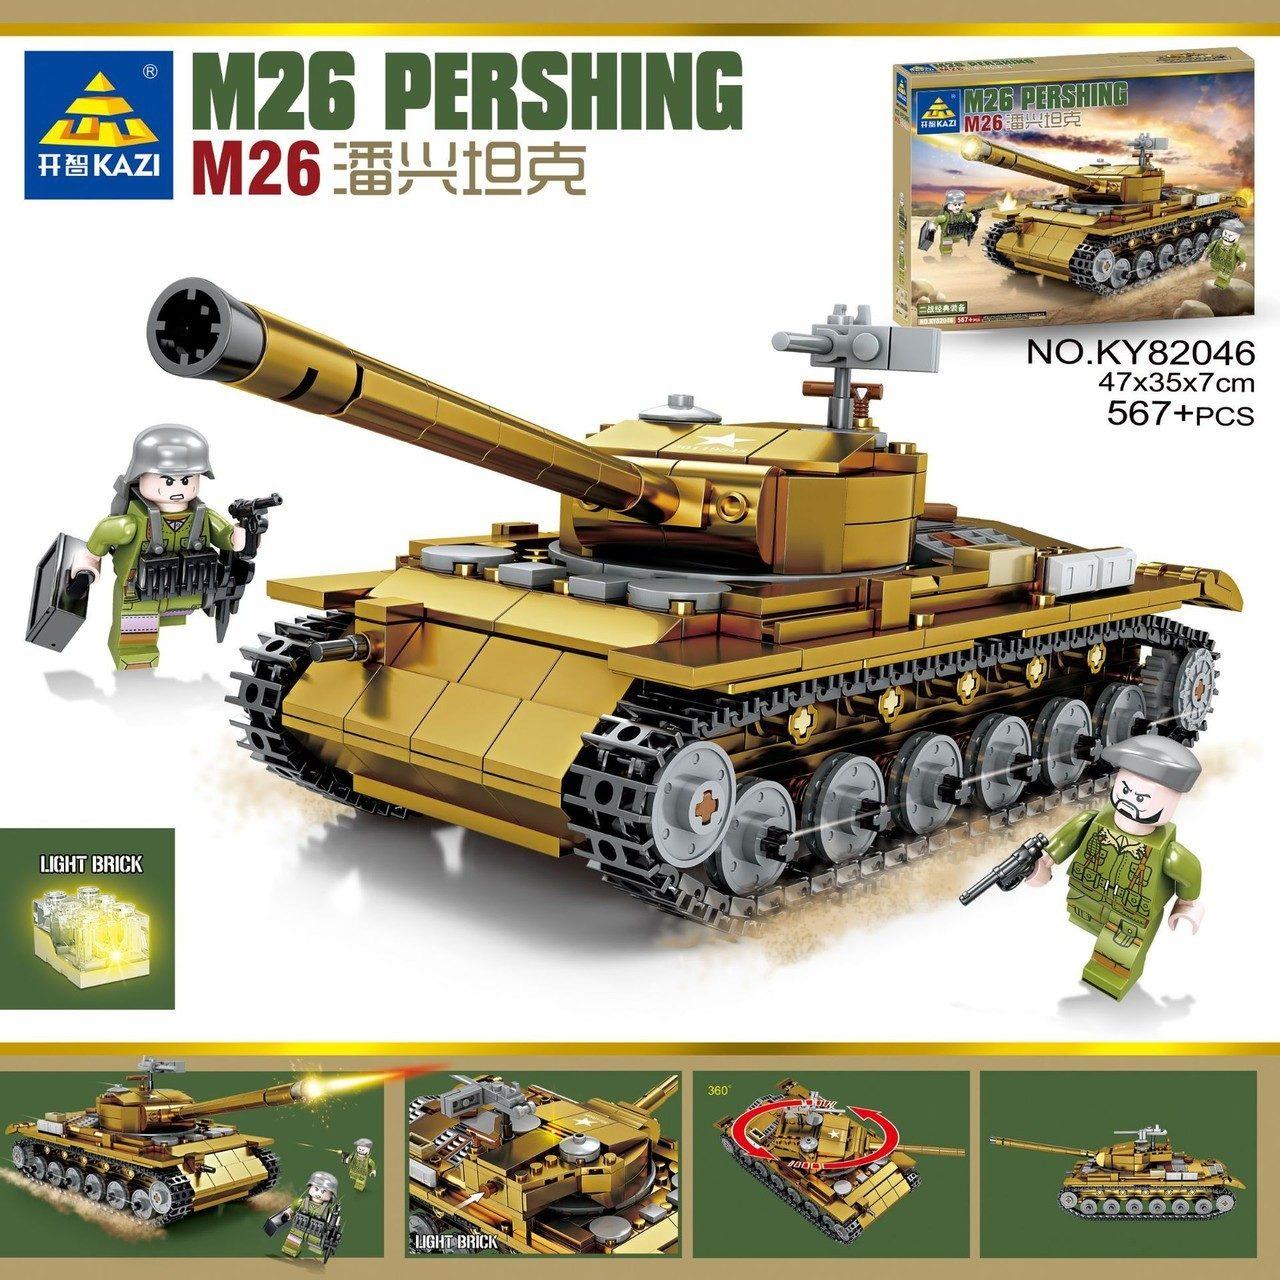 Конструктор Американский танк M26 Pershing со светом, KAZI 82046, фото 1